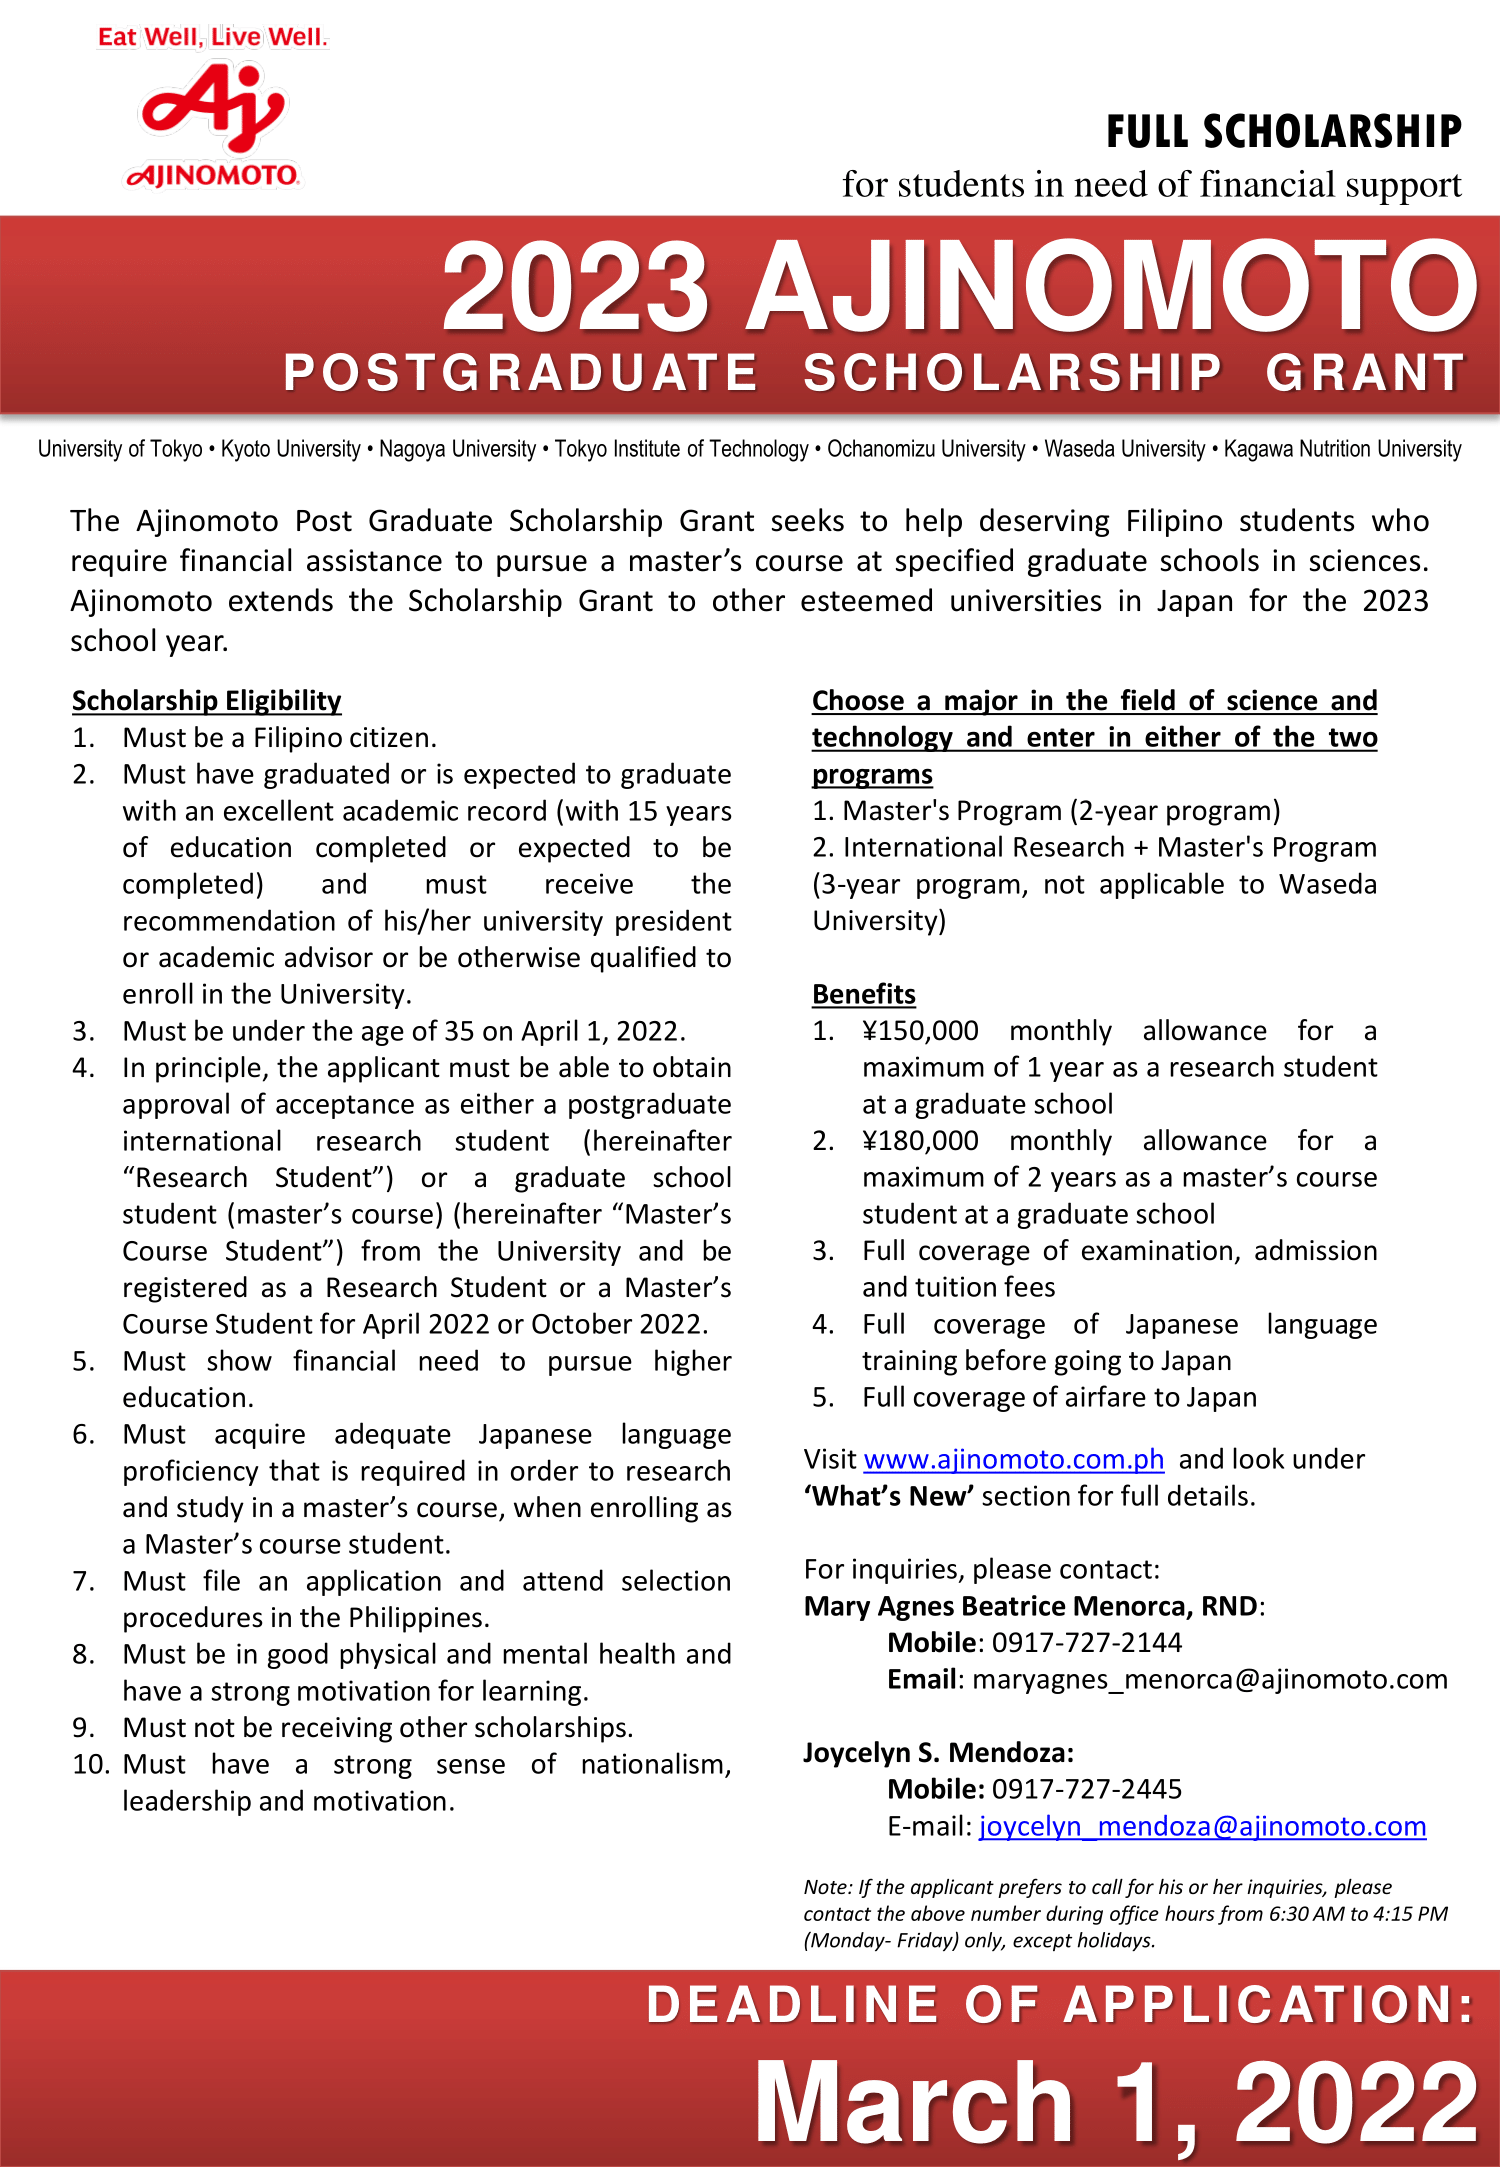 2023 Ajinomoto Postgraduate Scholarship Grant - UP Science